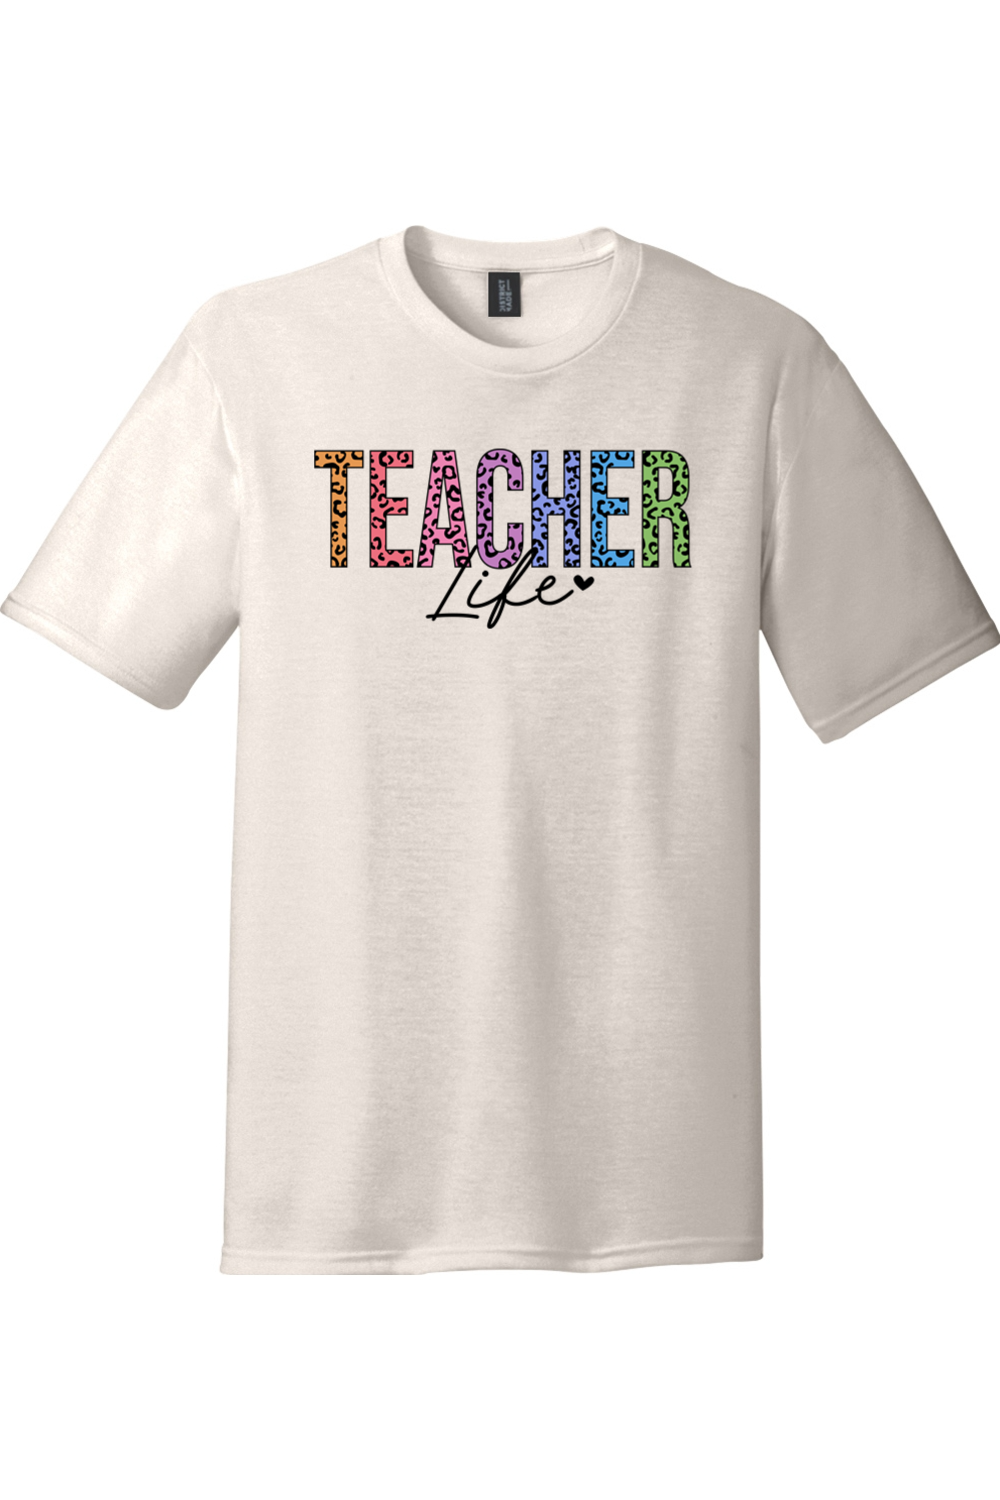 Teacher Life Colorful Leopard Print | Premium Tri-Blend T-Shirt